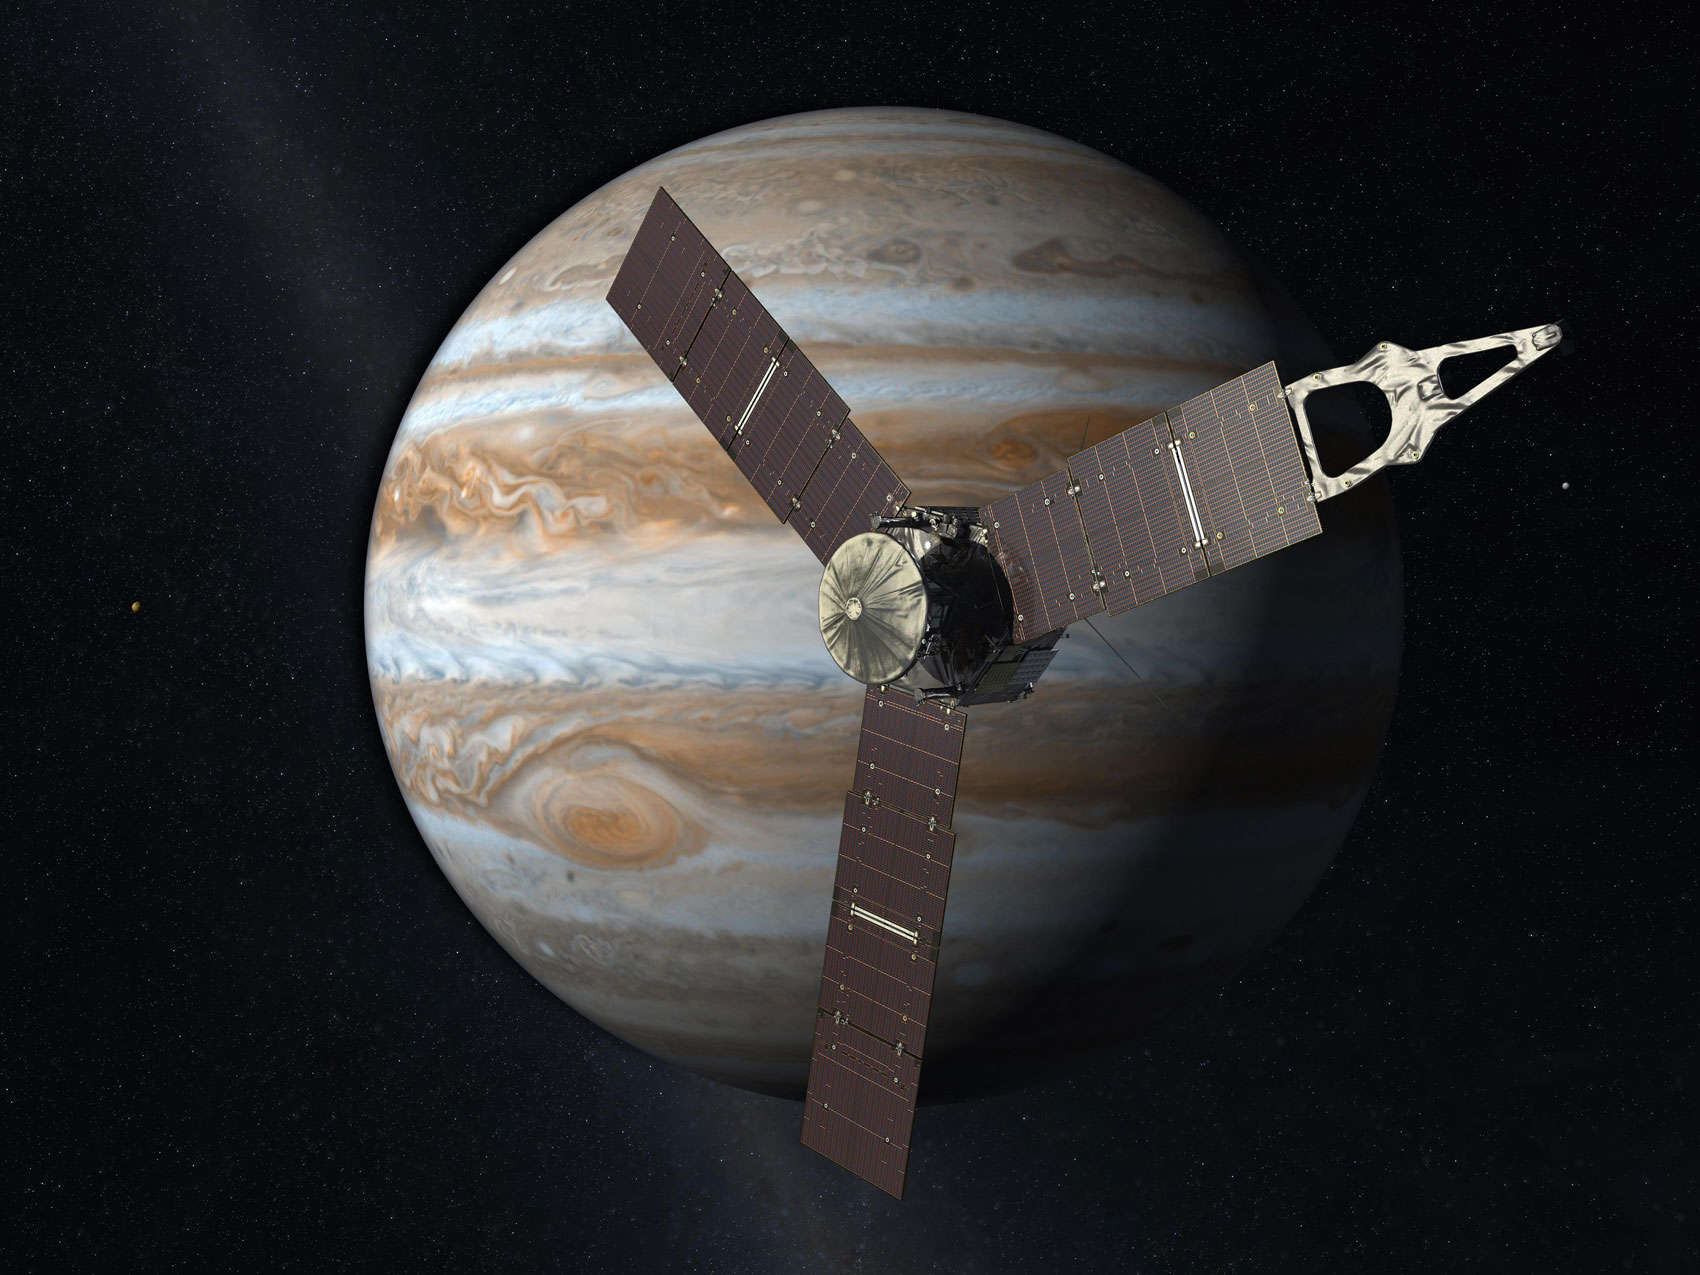 Artist’s concept of the Juno spacecraft orbiting Jupiter. Credit: NASA/JPL-Caltech